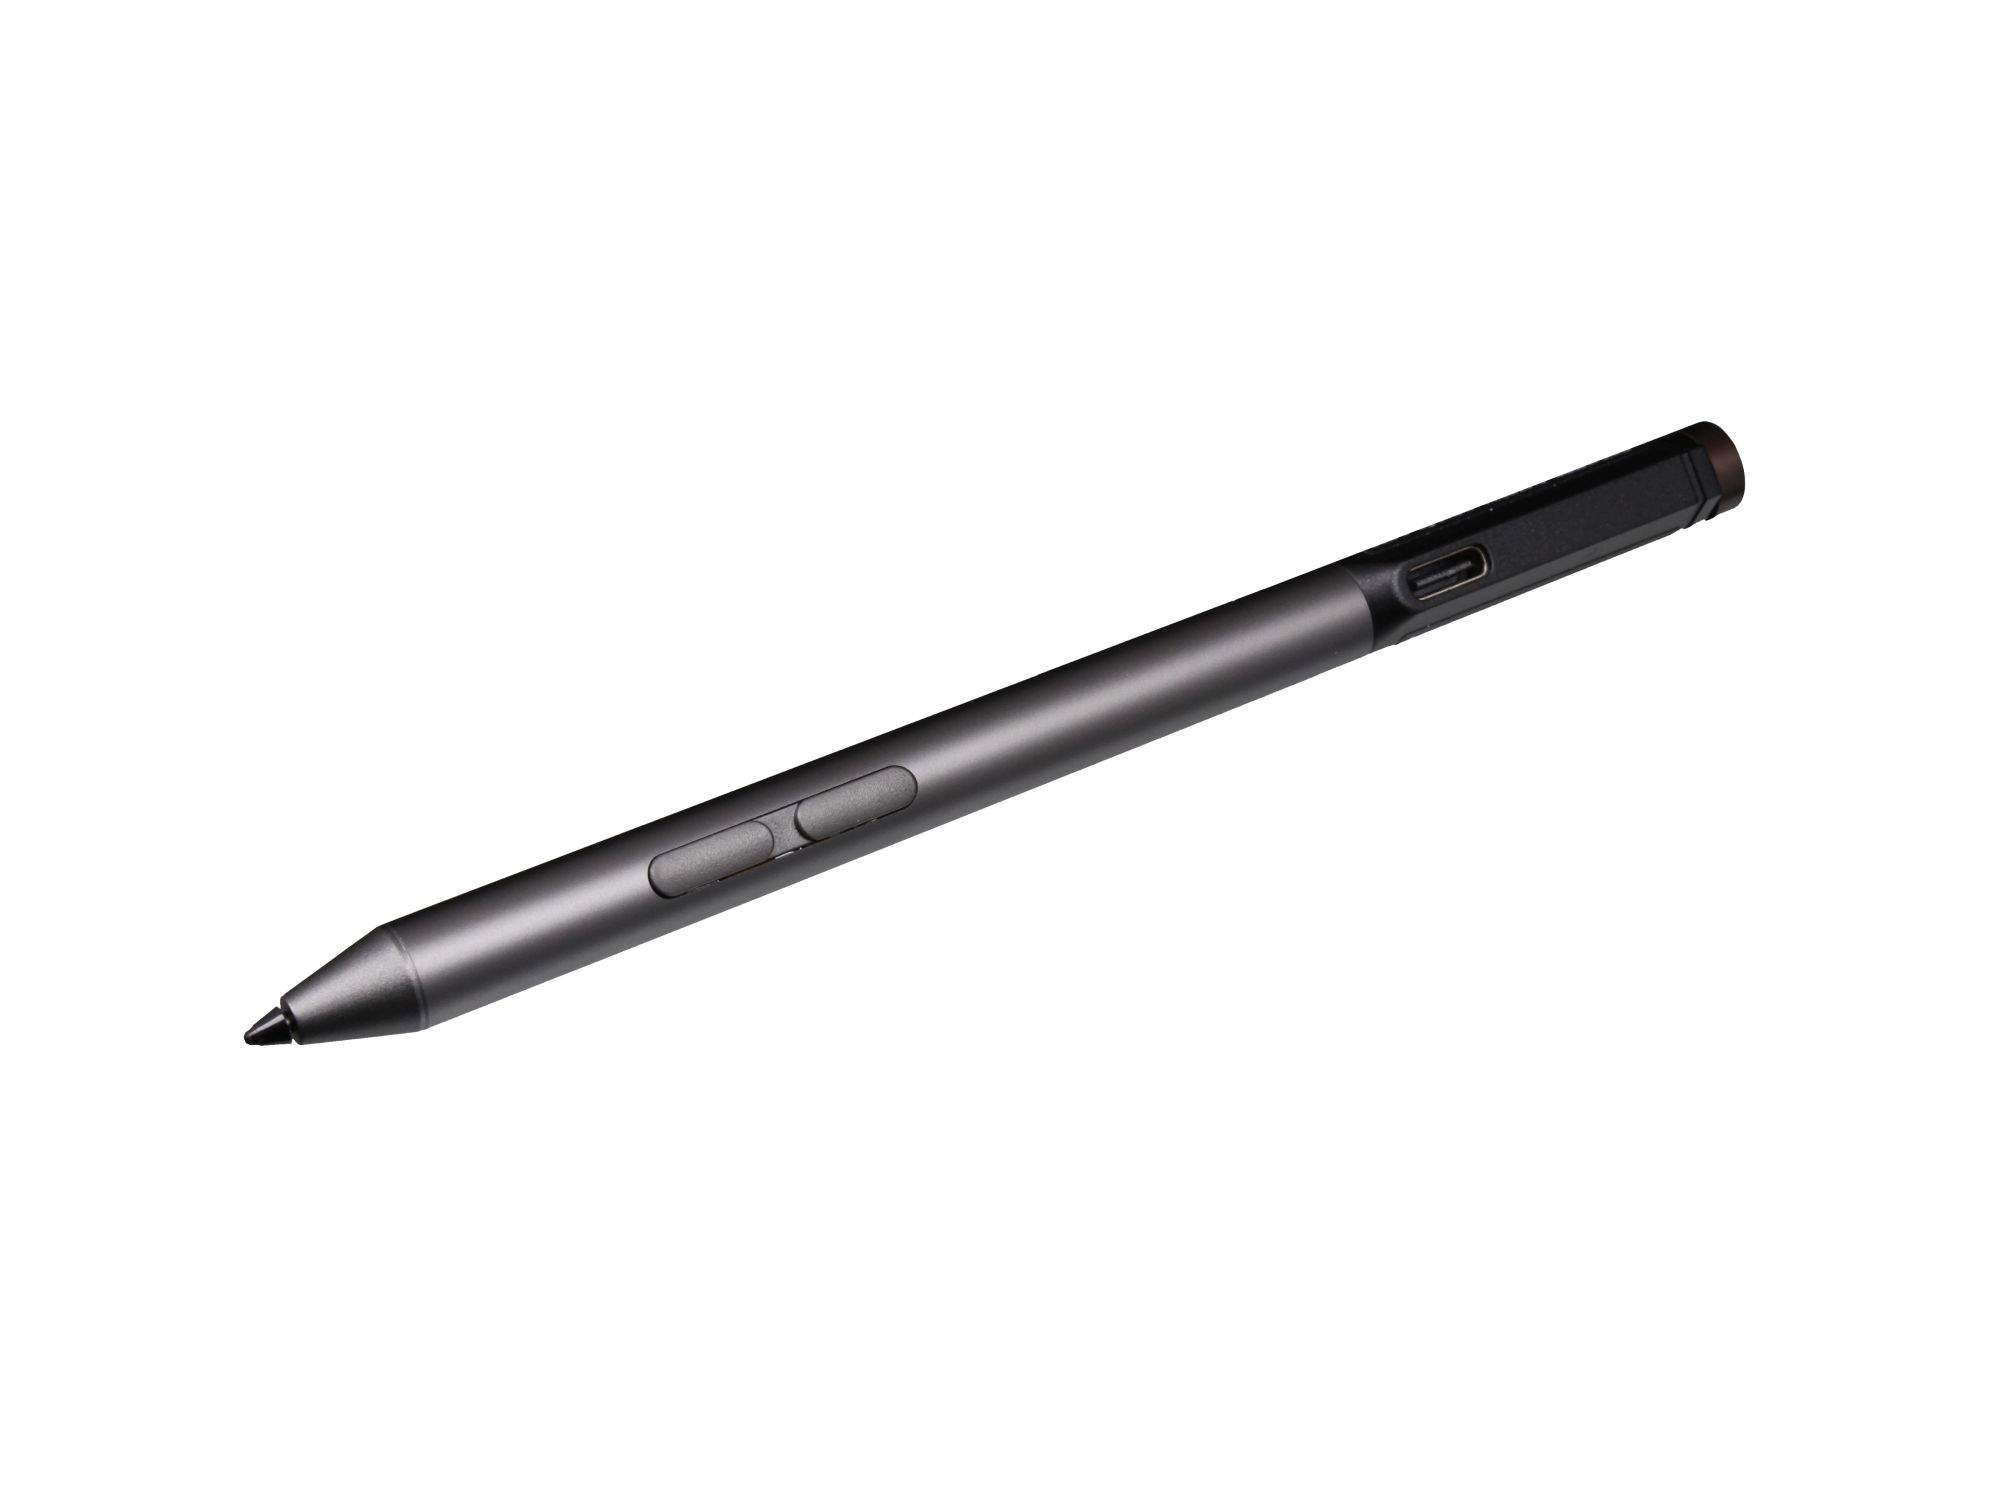 LENOVO Pen Pro, D9 5, w/ logo